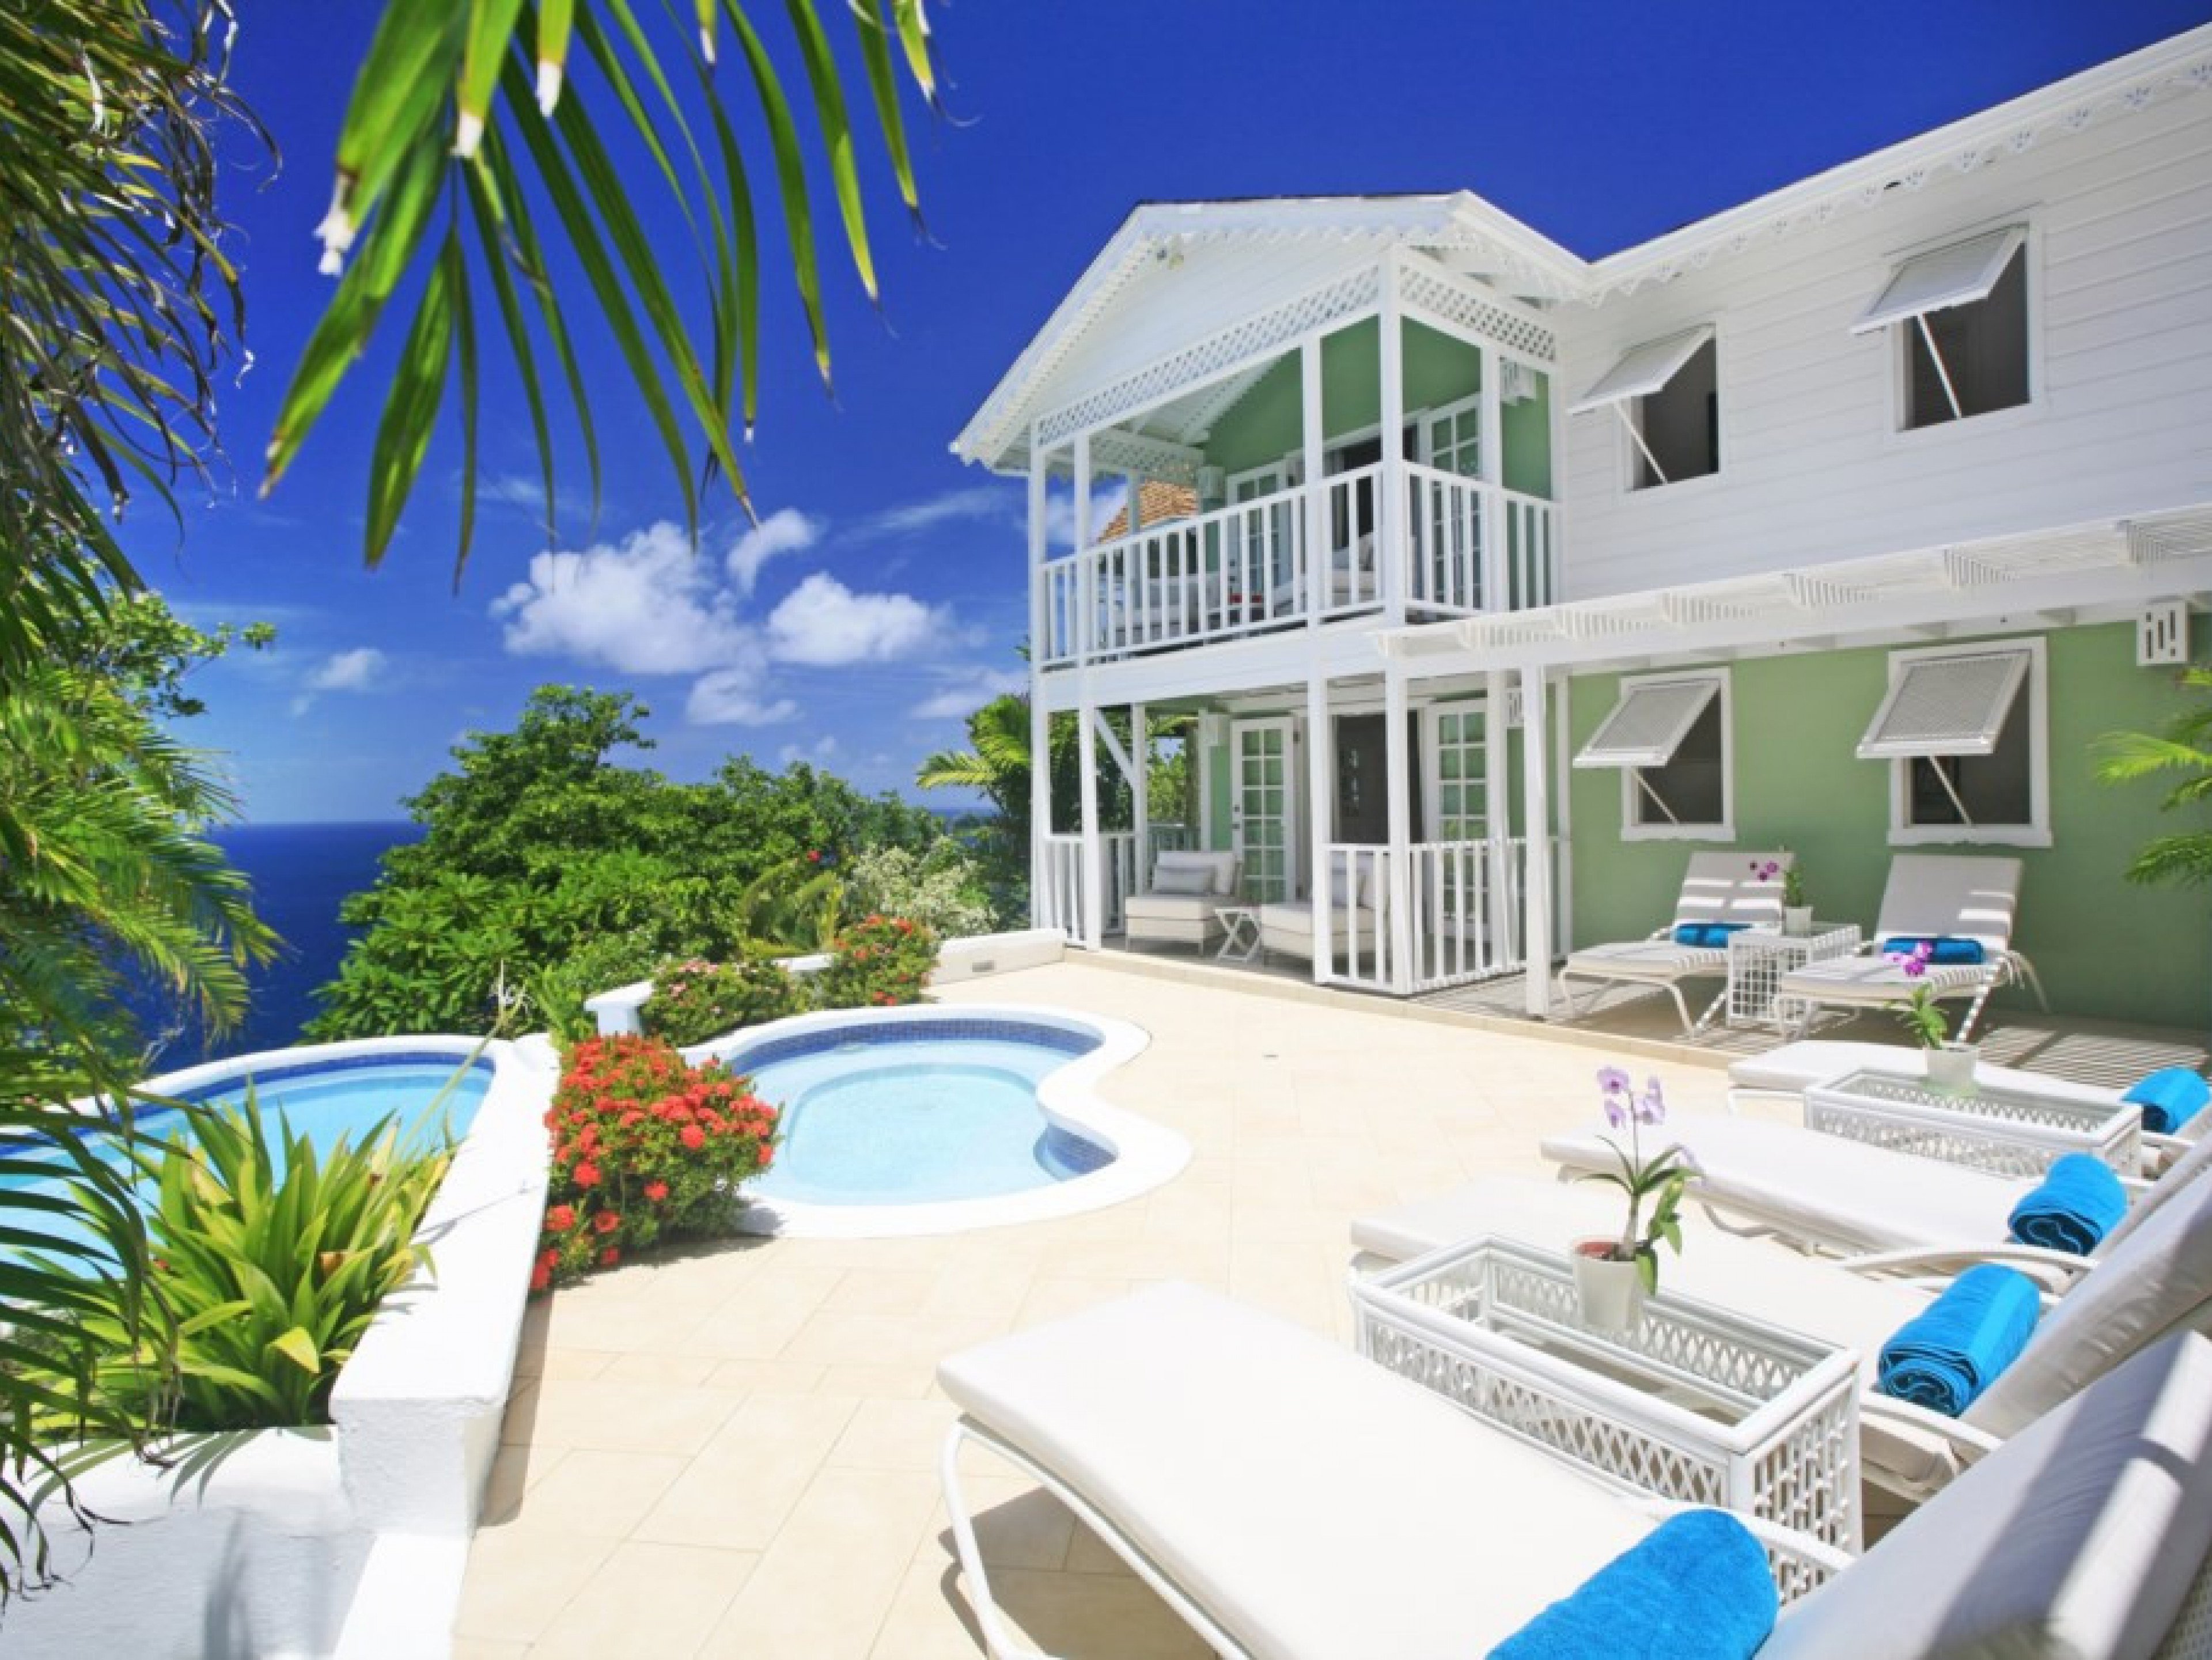 https://www.thetopvillas.com/destinations/caribbean/saint-lucia/cap-estate/saline-reef-2-bedroom